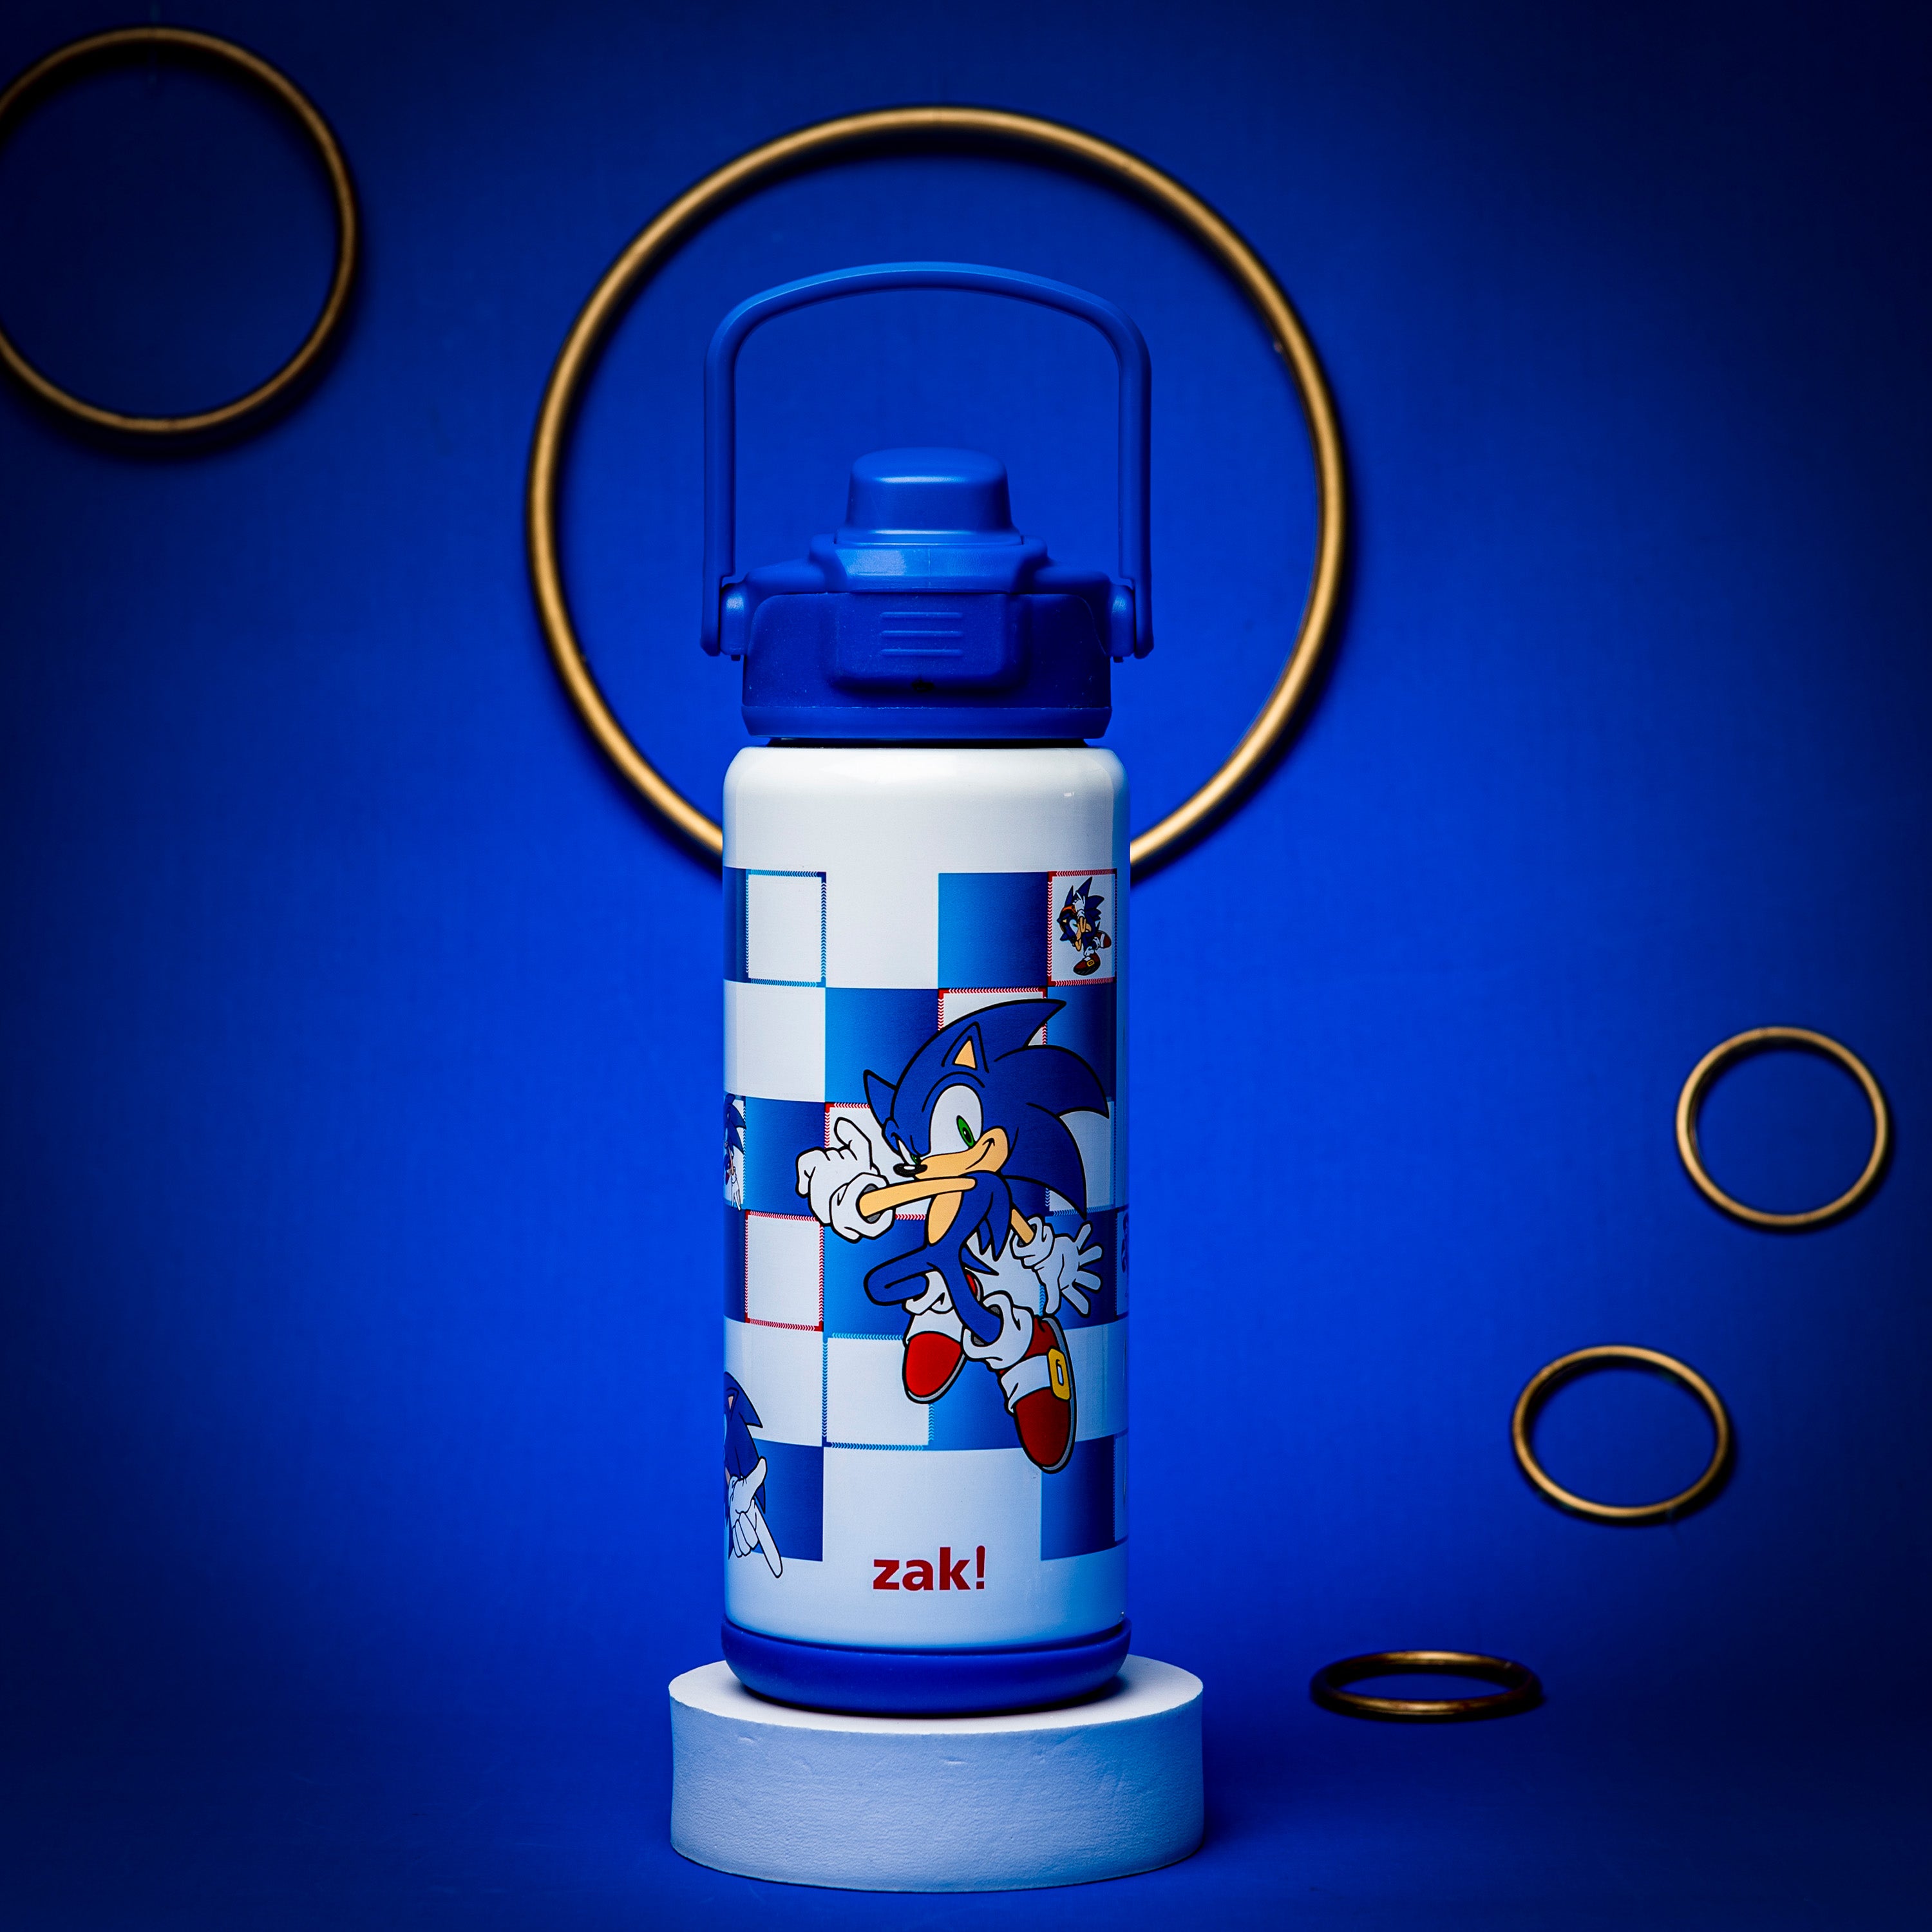 Sonic The Hedgehog aluminum Kids Water bottle 520ml